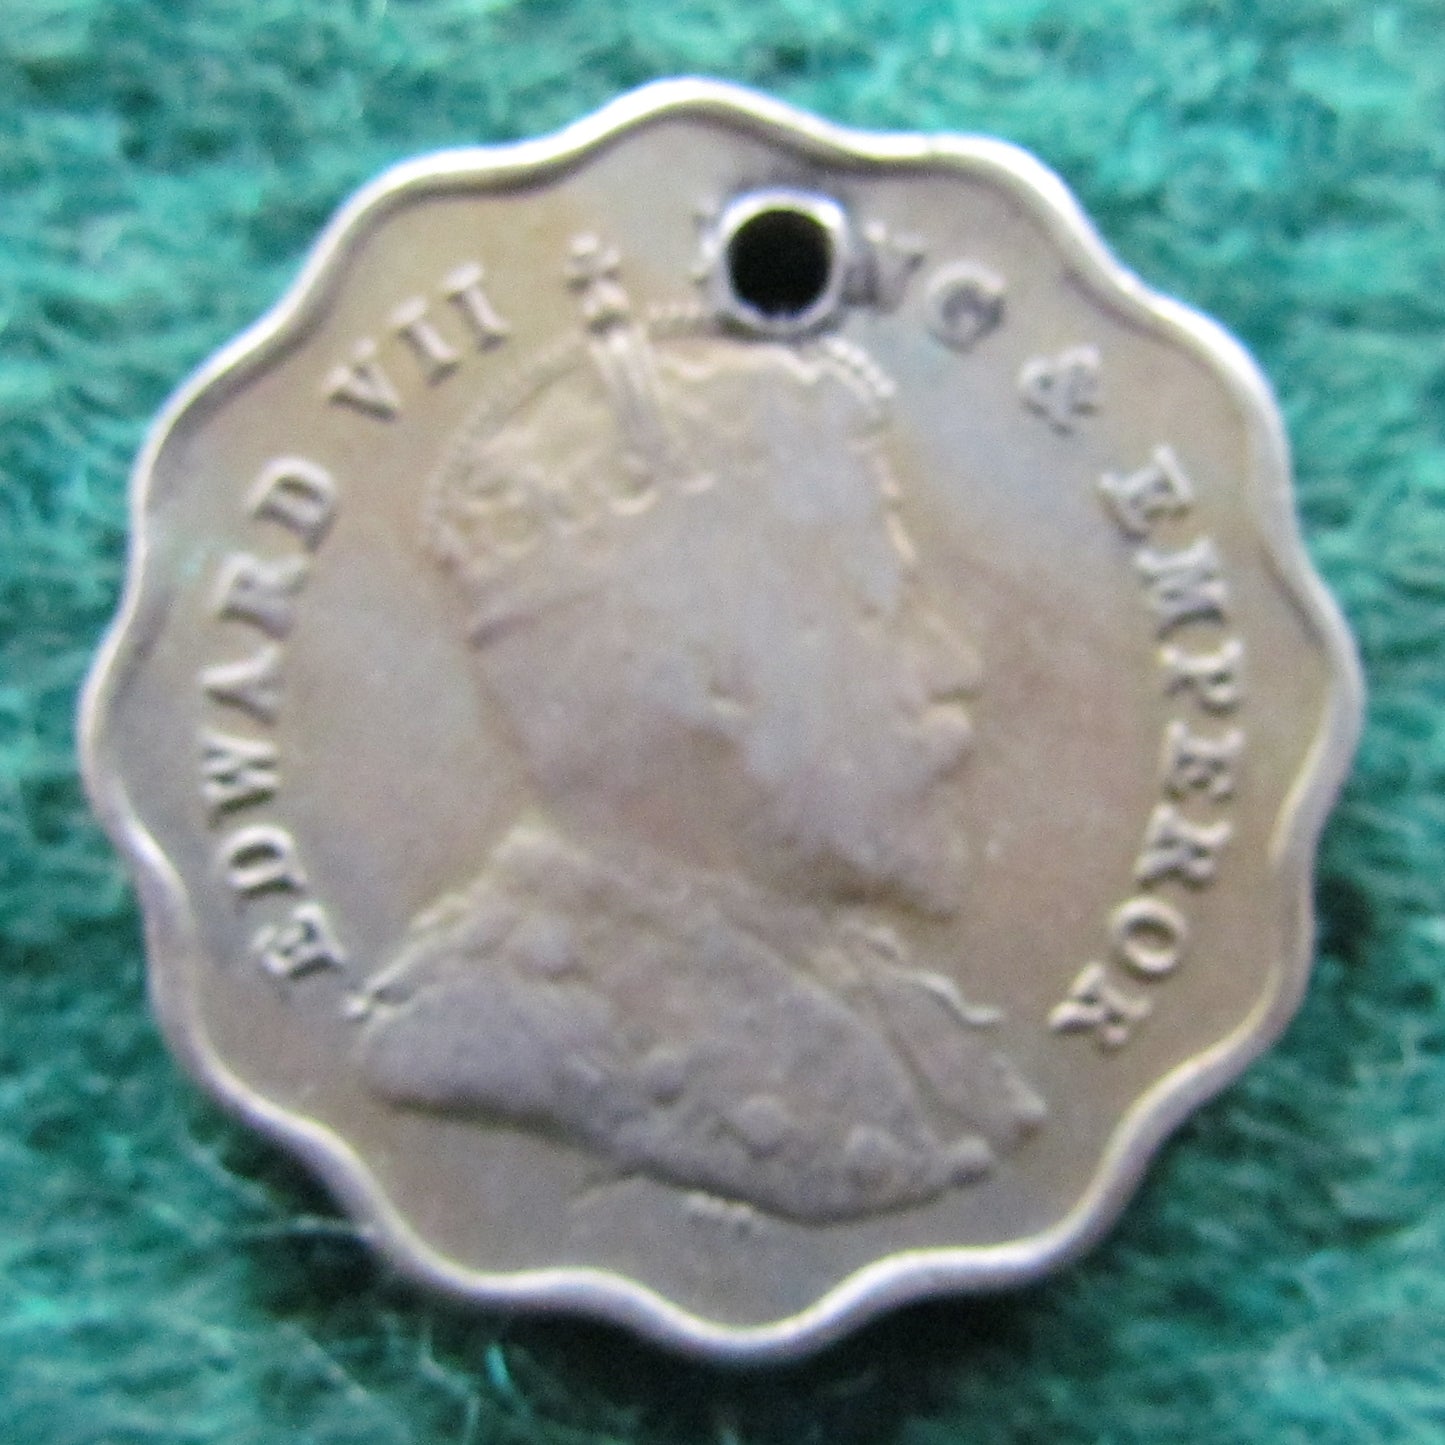 India 1907 1 One Anna King Edward VII Coin - British Rule